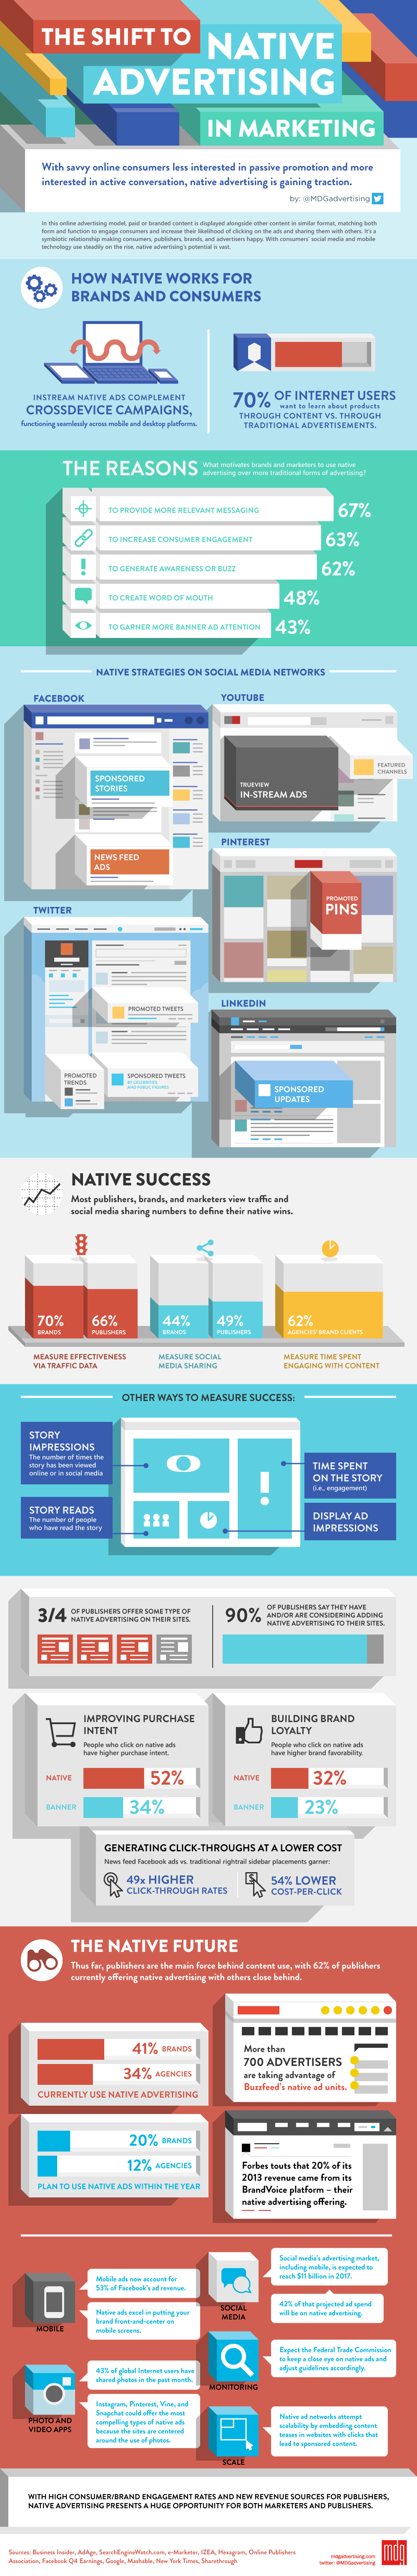 Native Advertising Stats